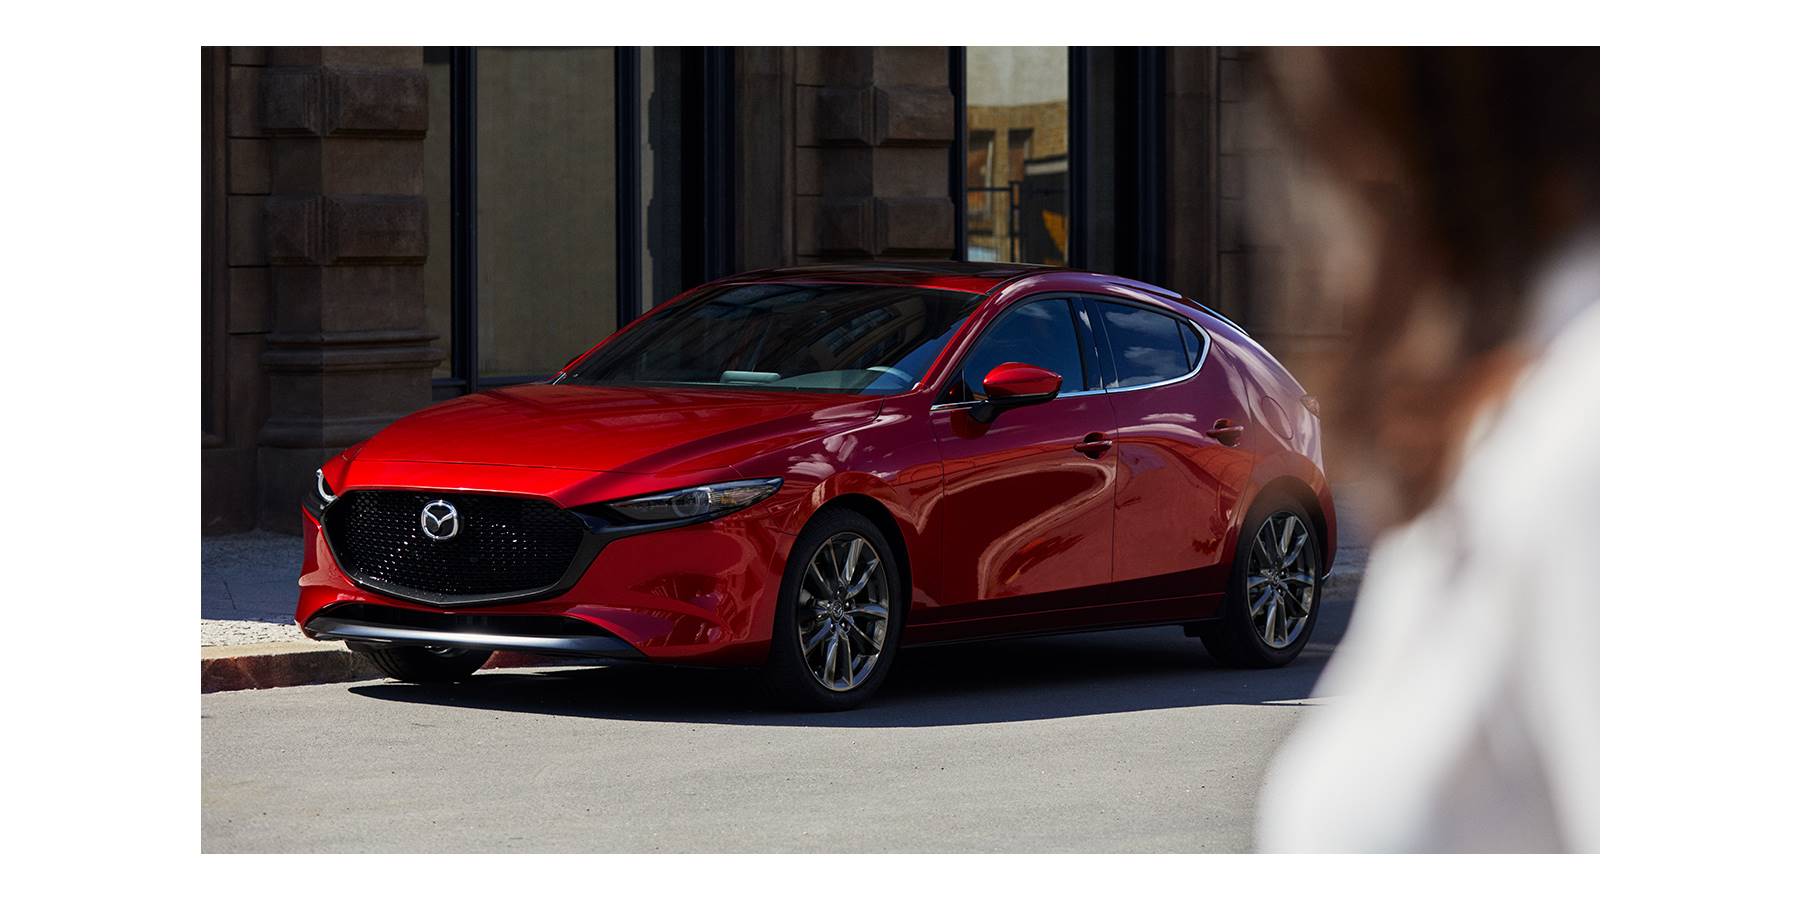 2019 Mazda 3 Hatchback Compact Car